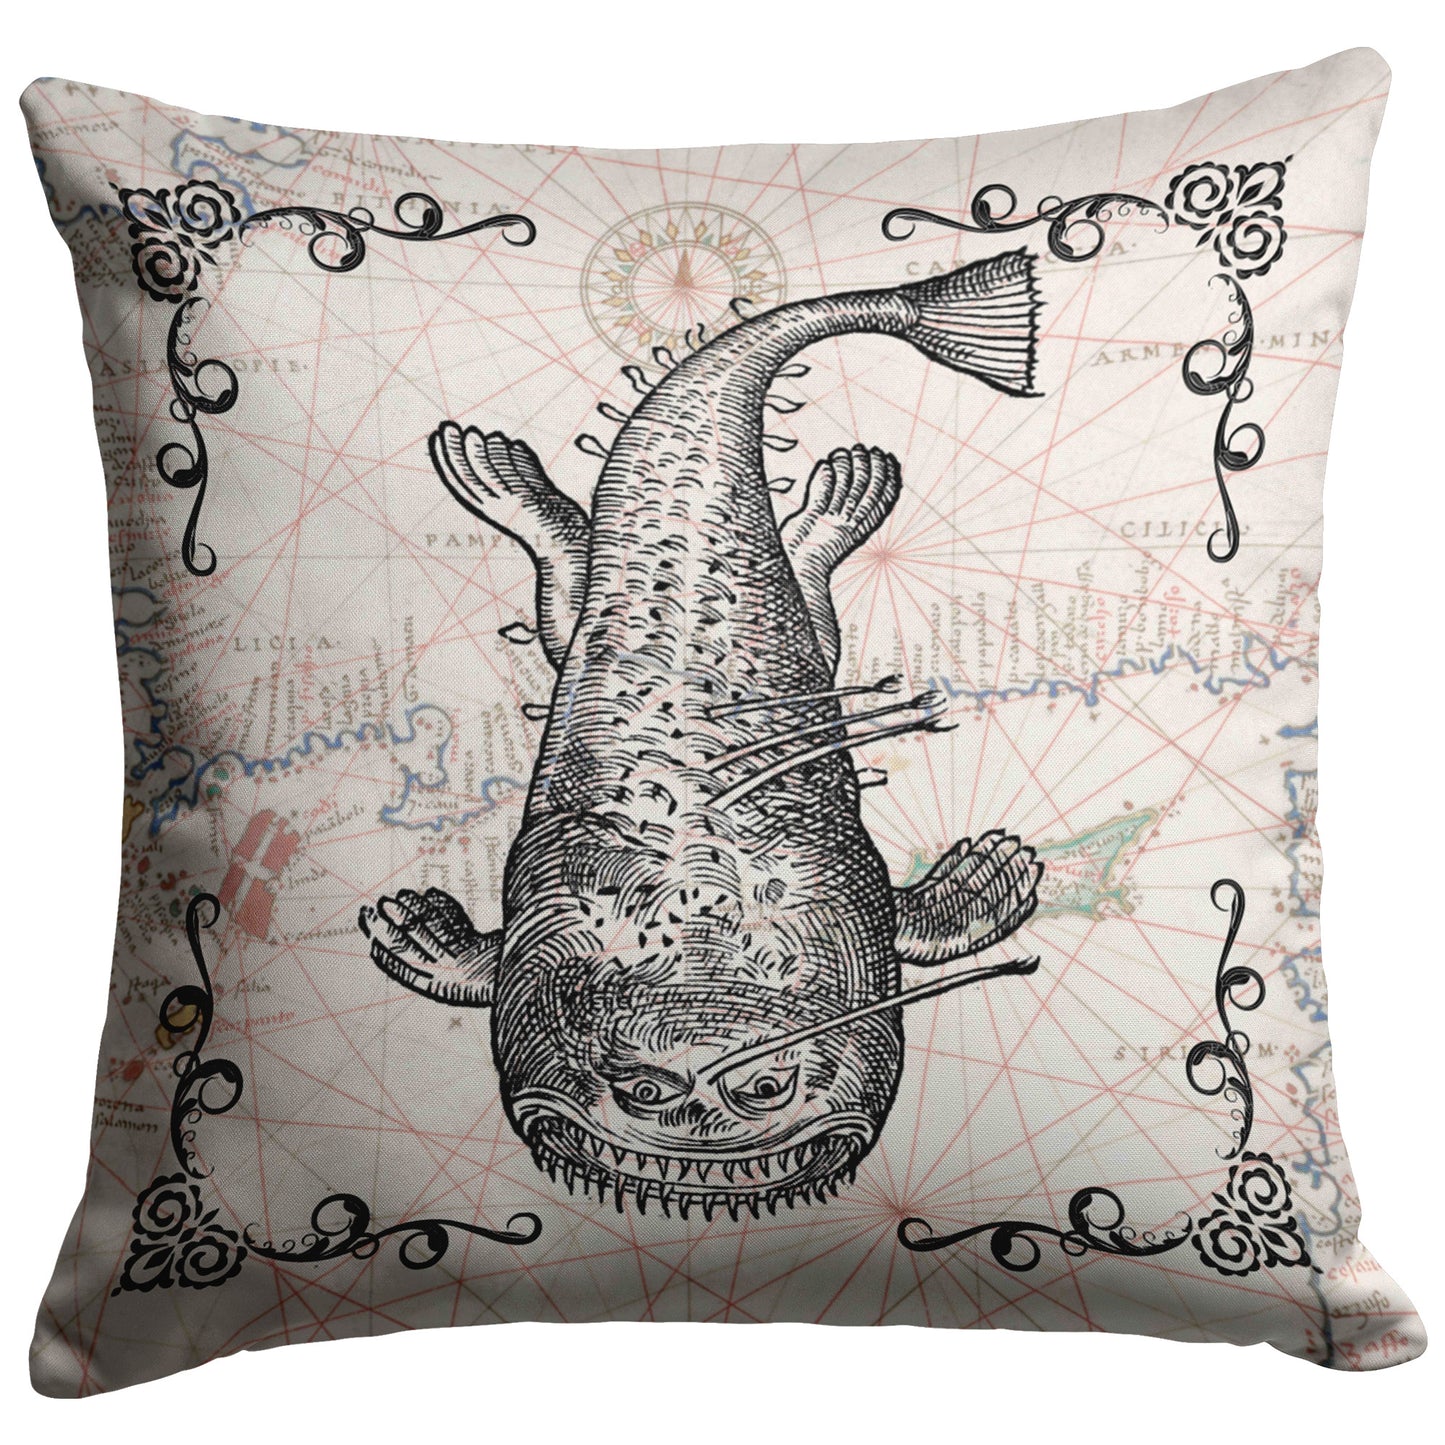 Sea Monster Throw Pillow - Long Fish